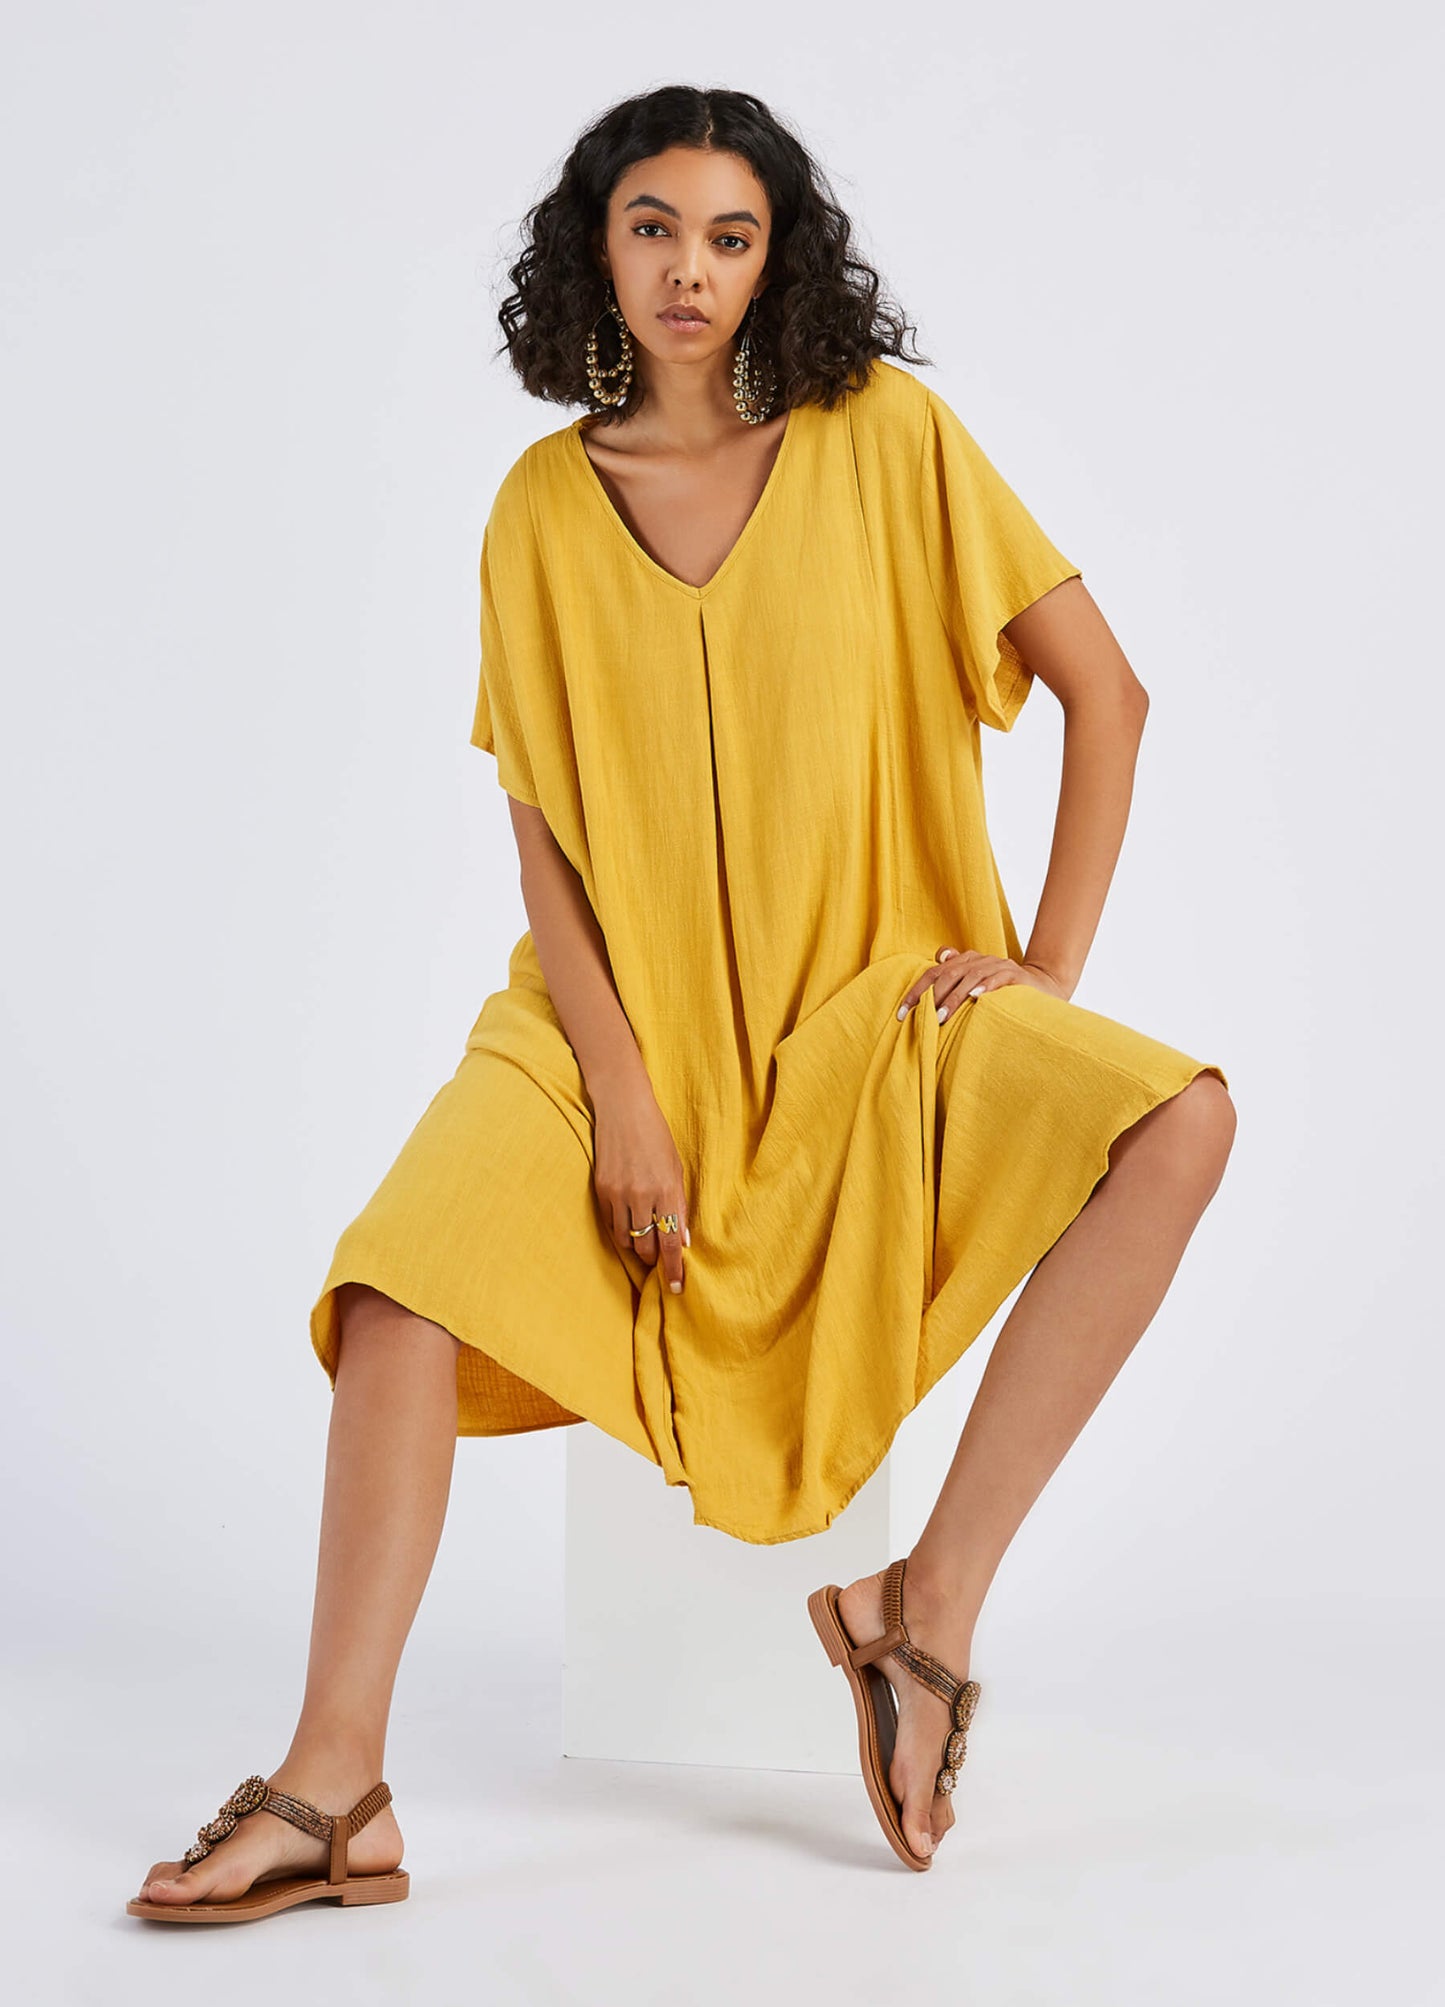 MECALA Women's Plus Size Solid Short Sleeve Maxi Dress